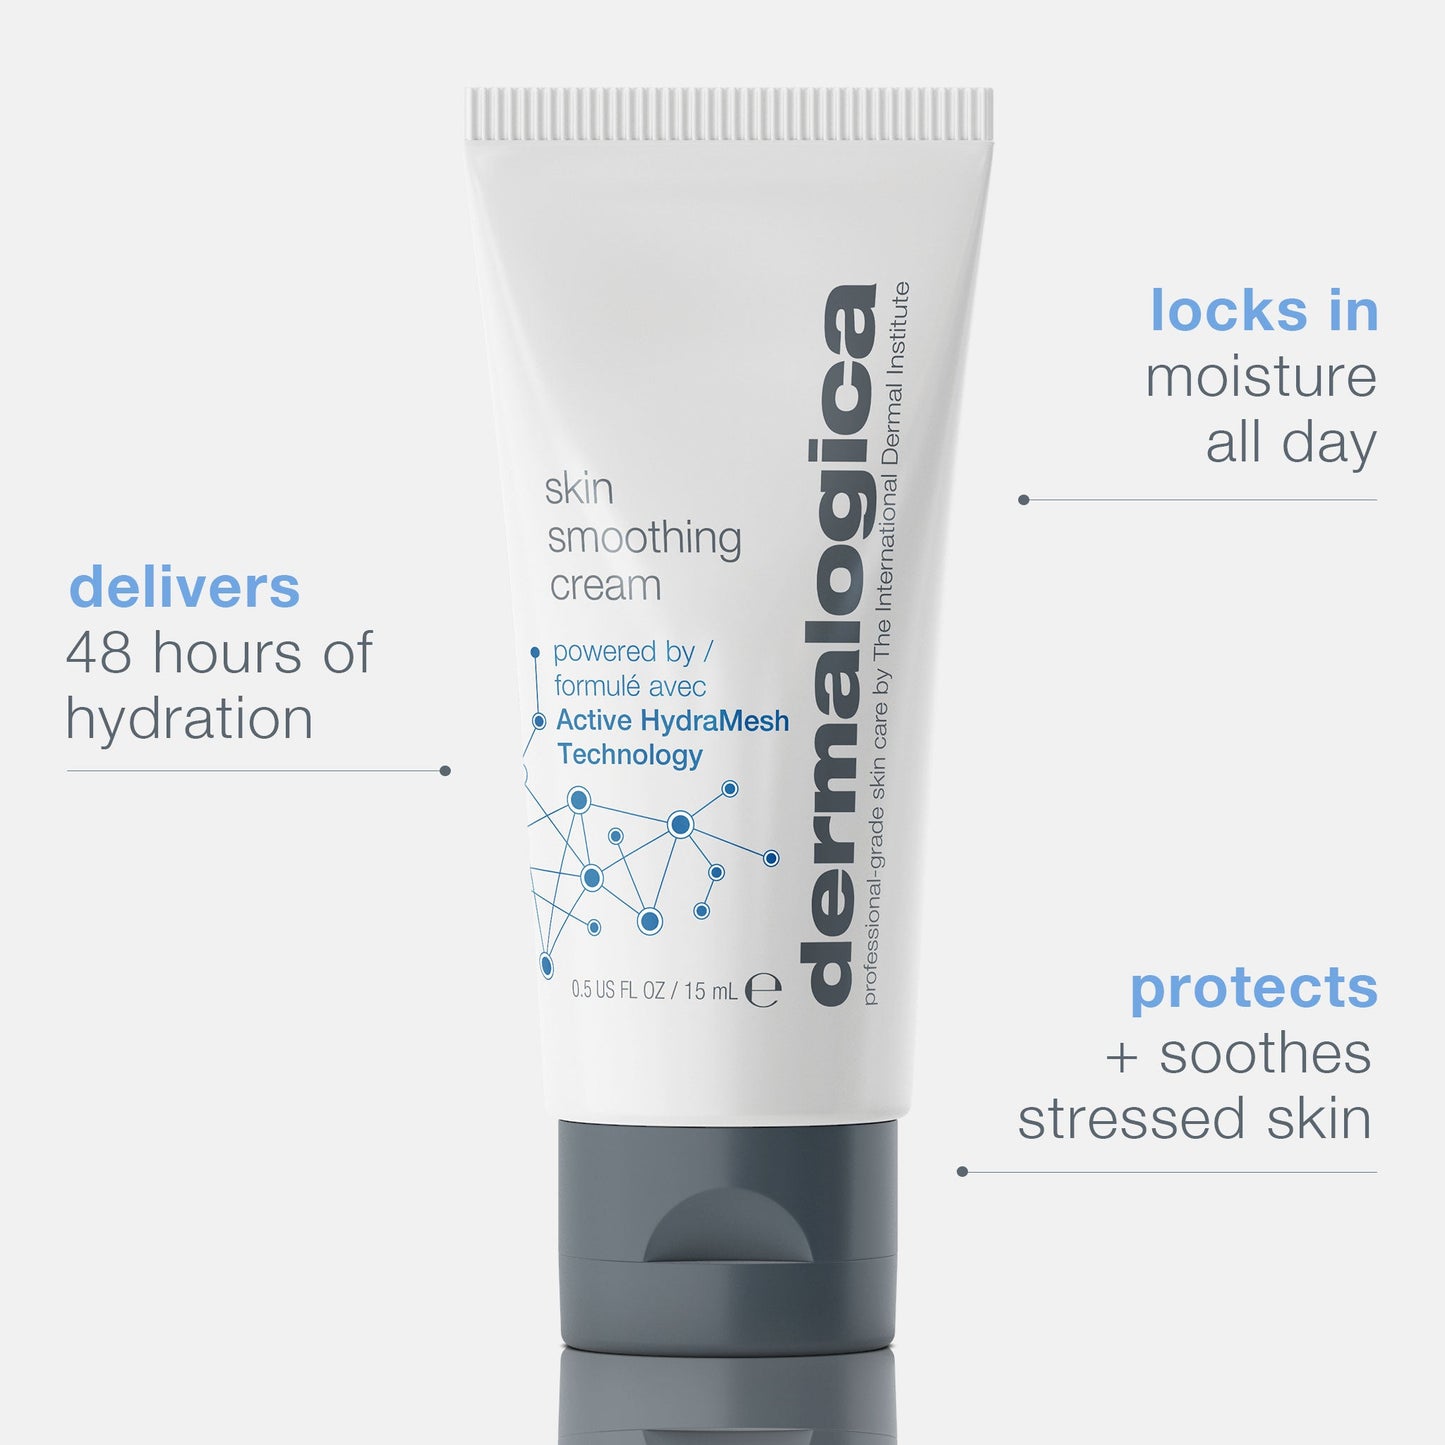 skin smoothing cream 0.5 oz benefits